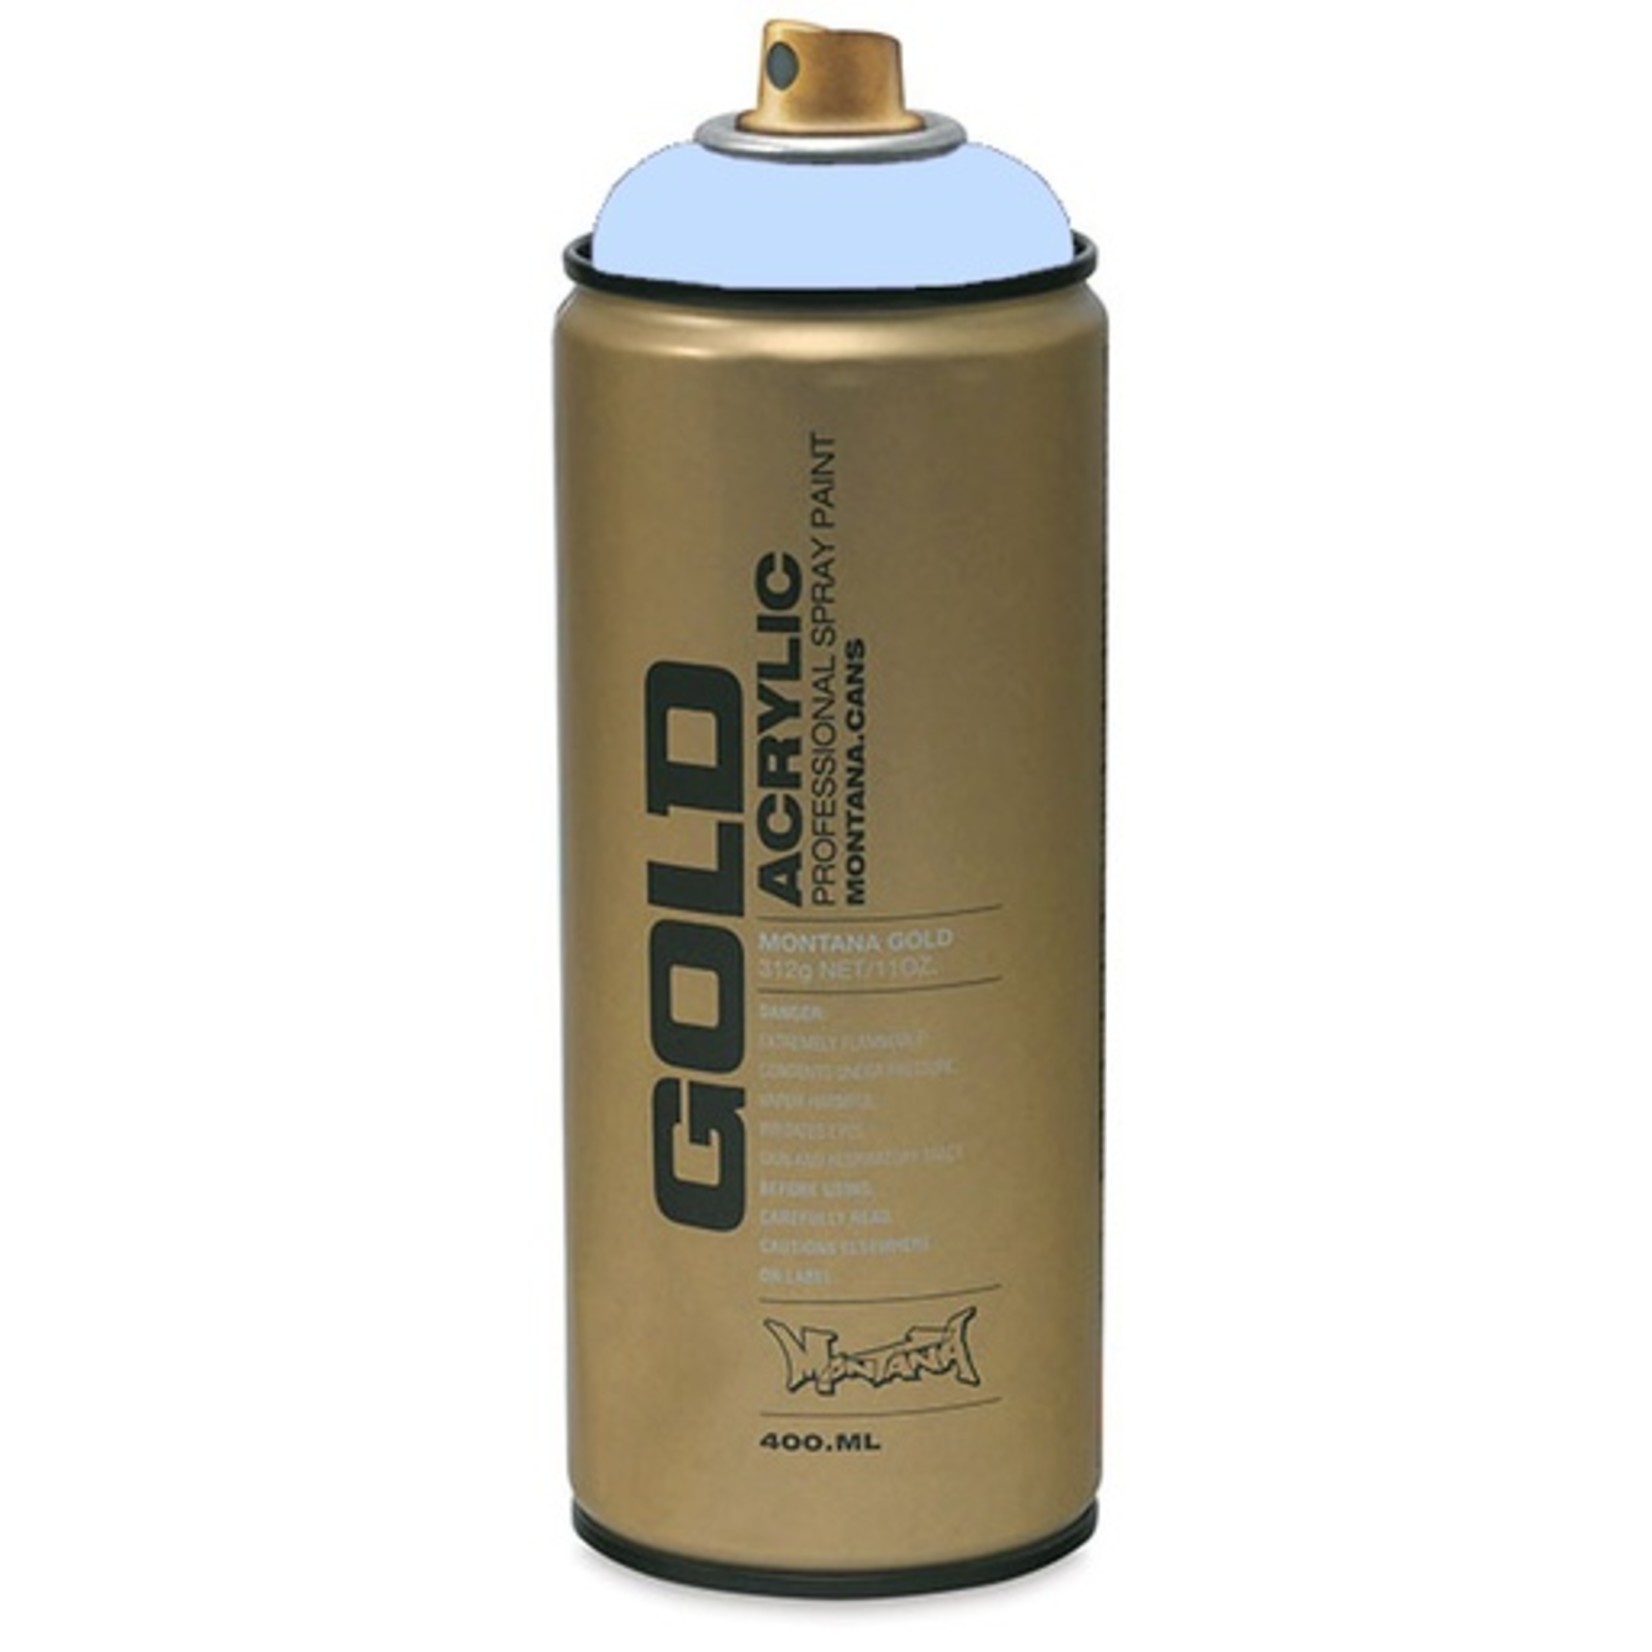 Montana GOLD Acrylic Spray Paint 400ml Shock Orange Dark